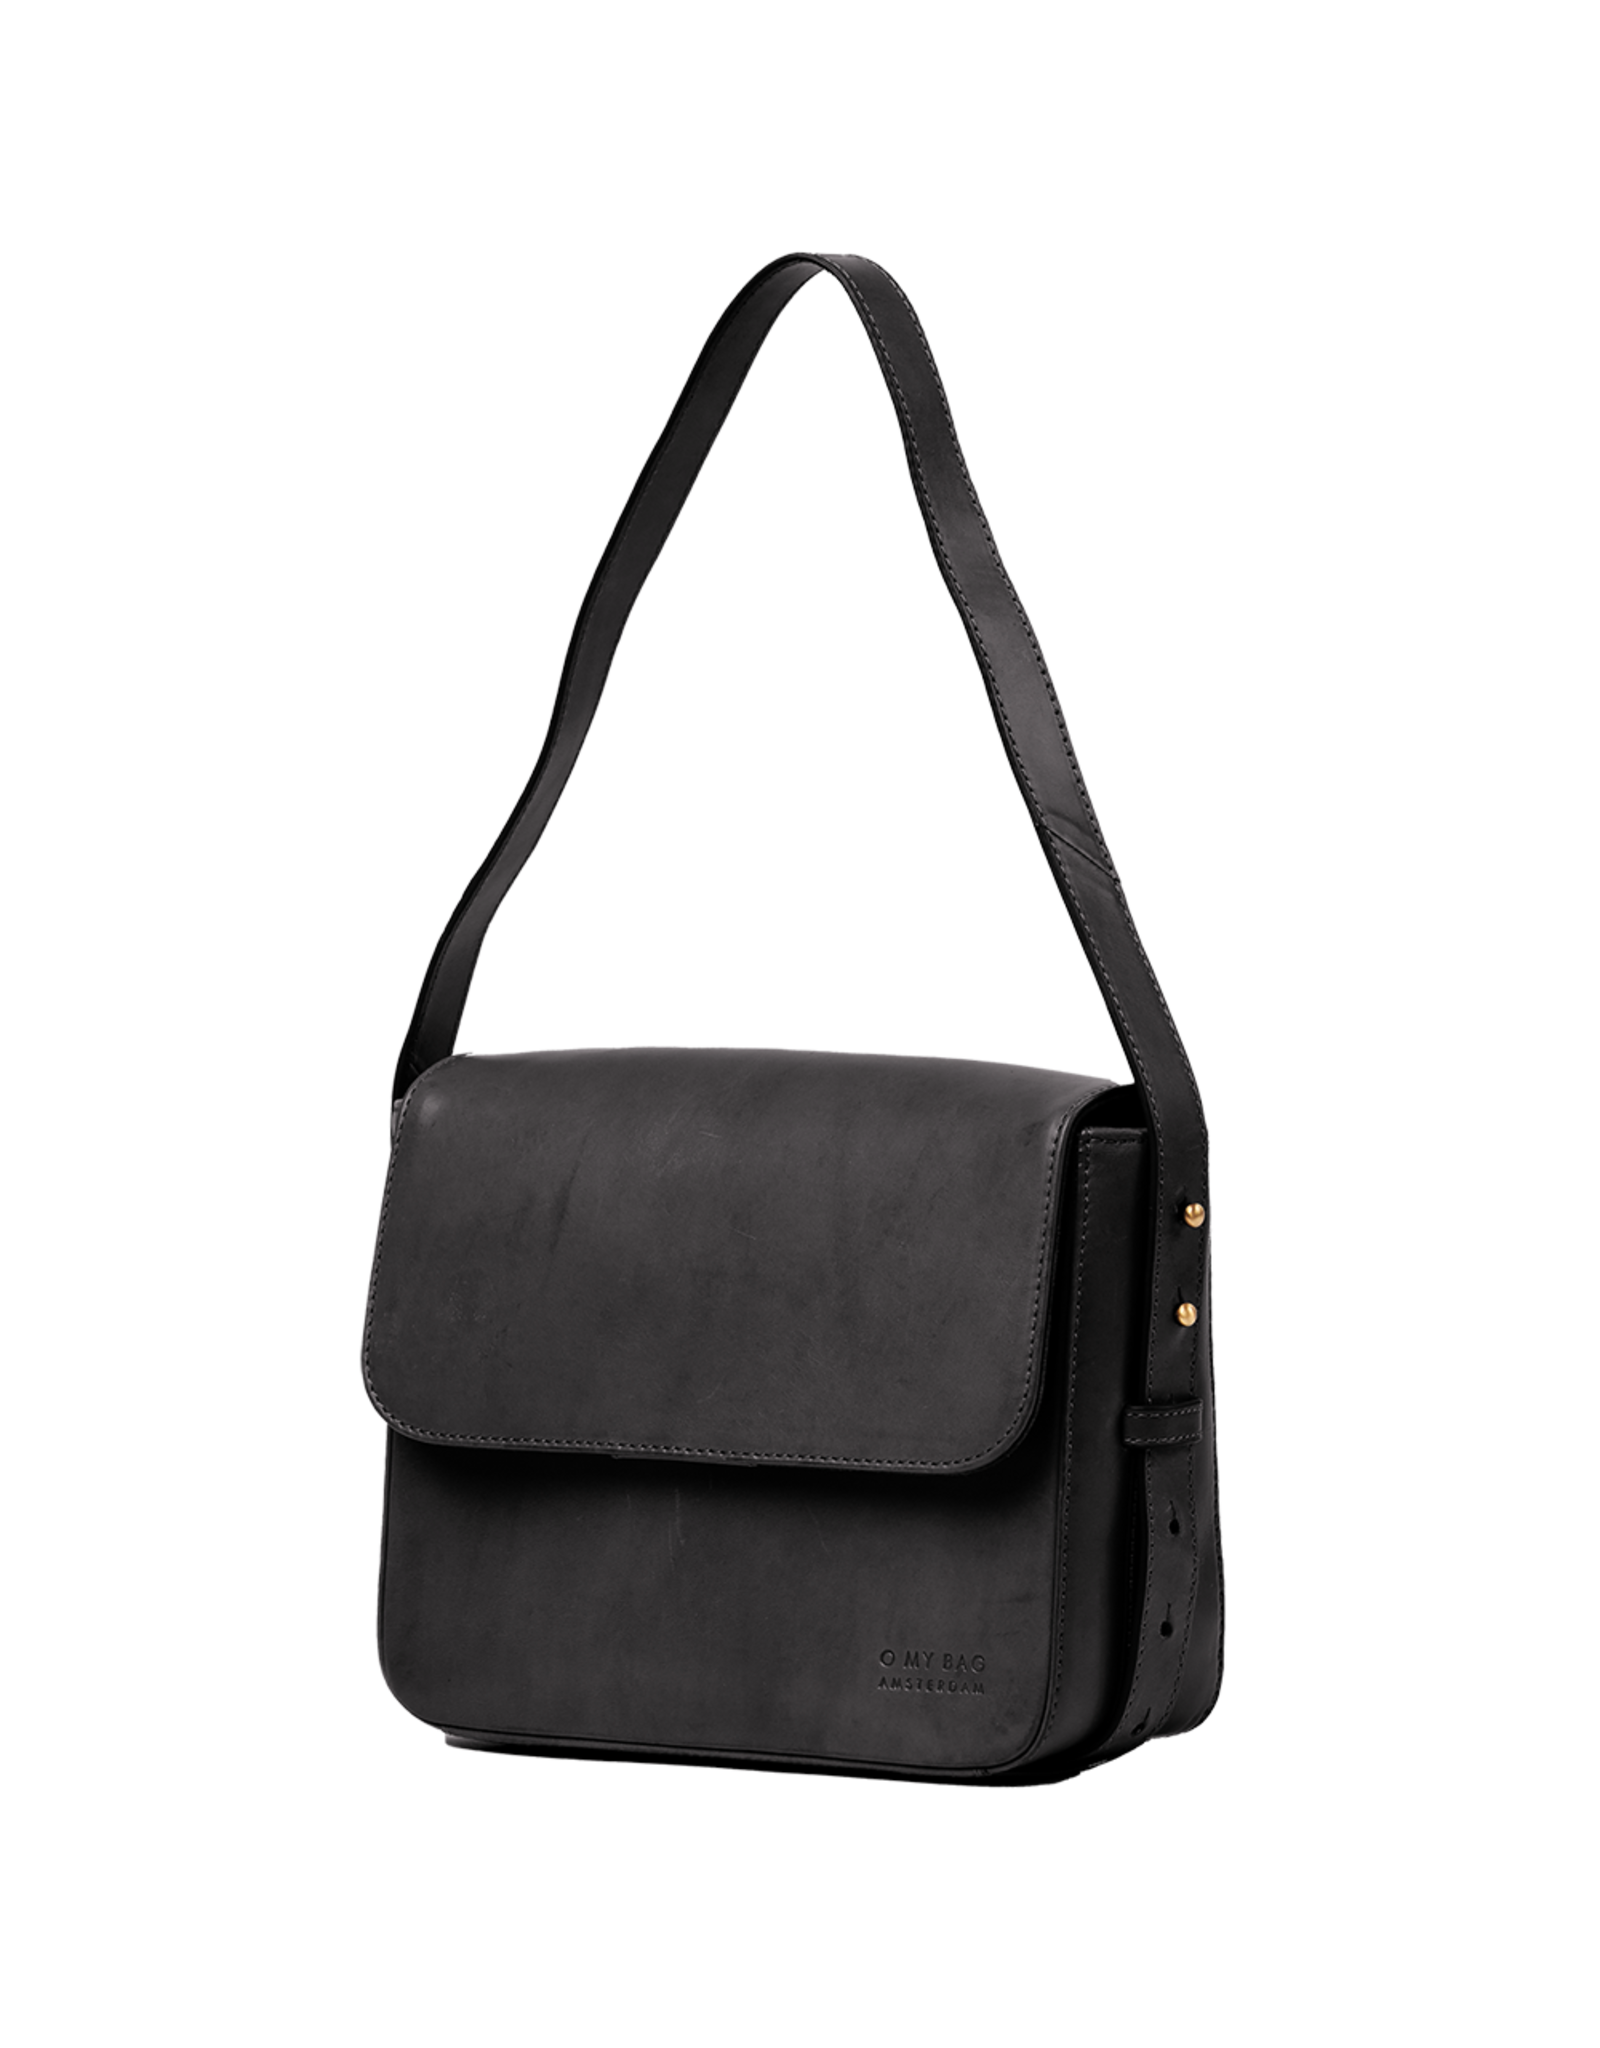 O My Bag O My Bag - Gina's bag black classic leather